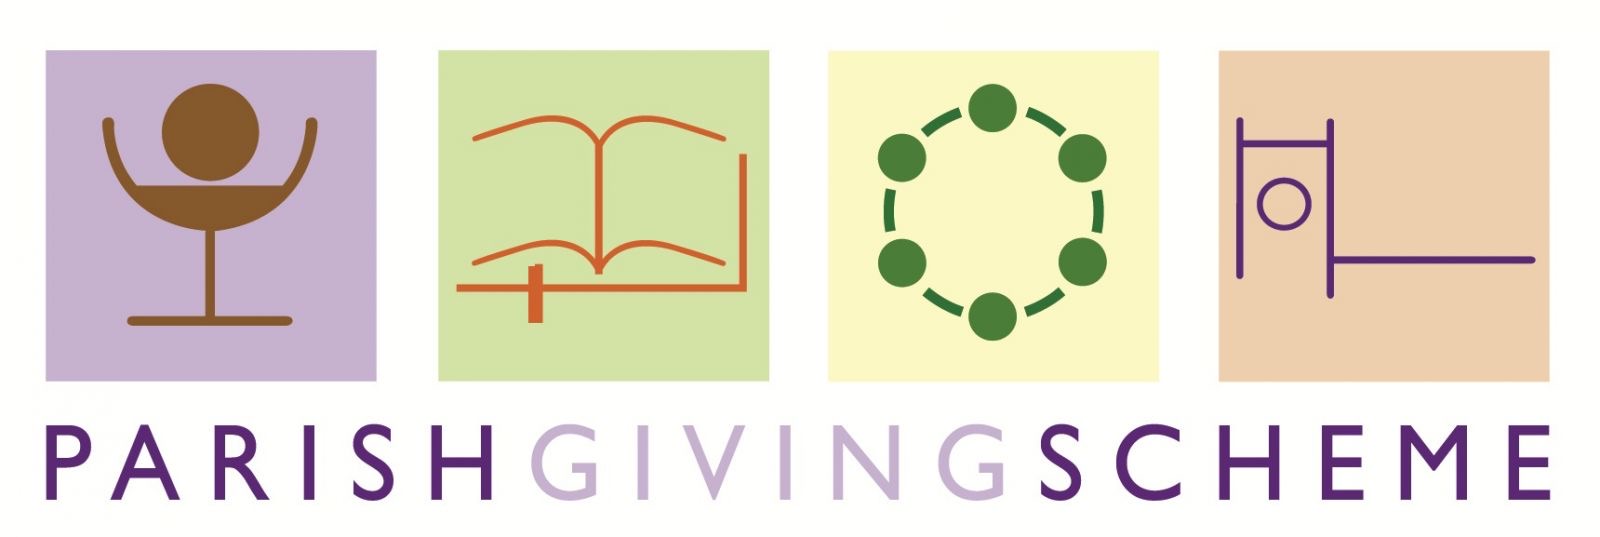 Parish Giving Scheme logo gXps